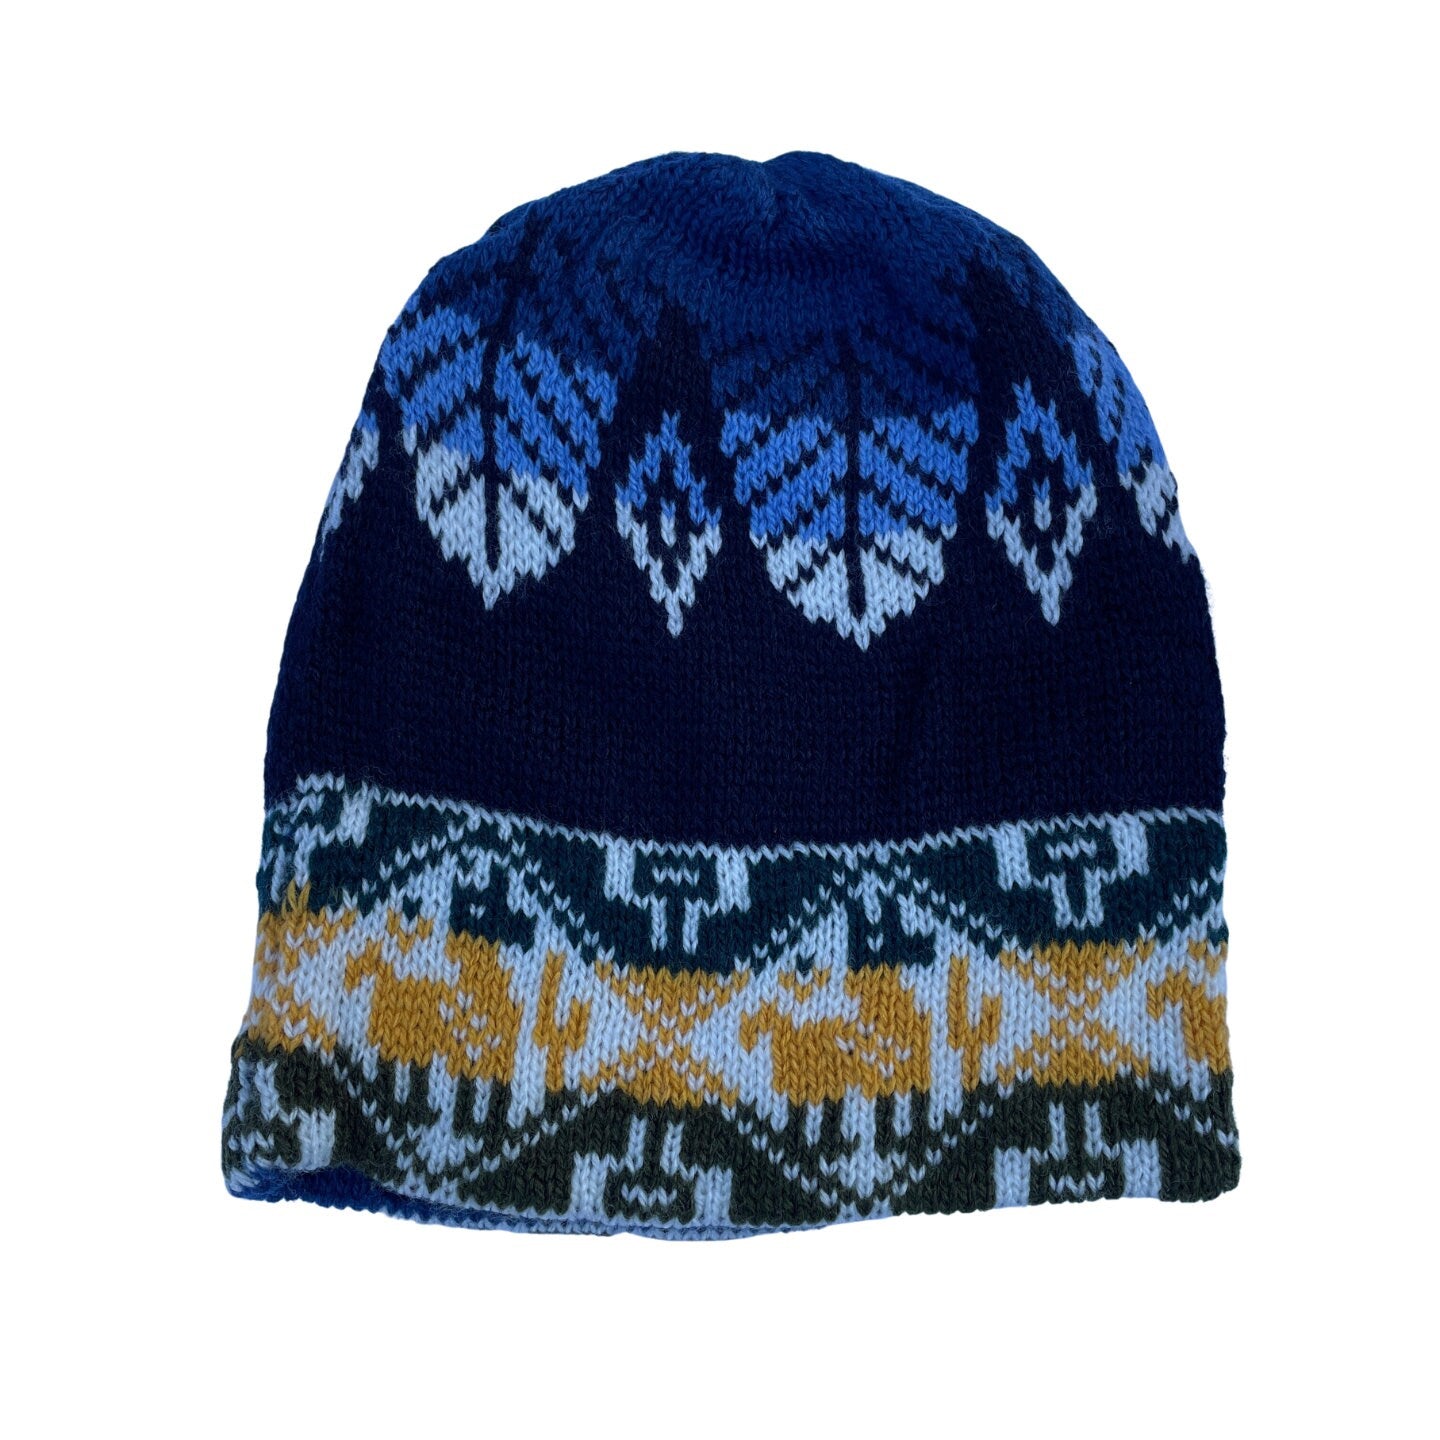 Soft Knitted Alpaca Beanie Hat | Yale Blue Navy